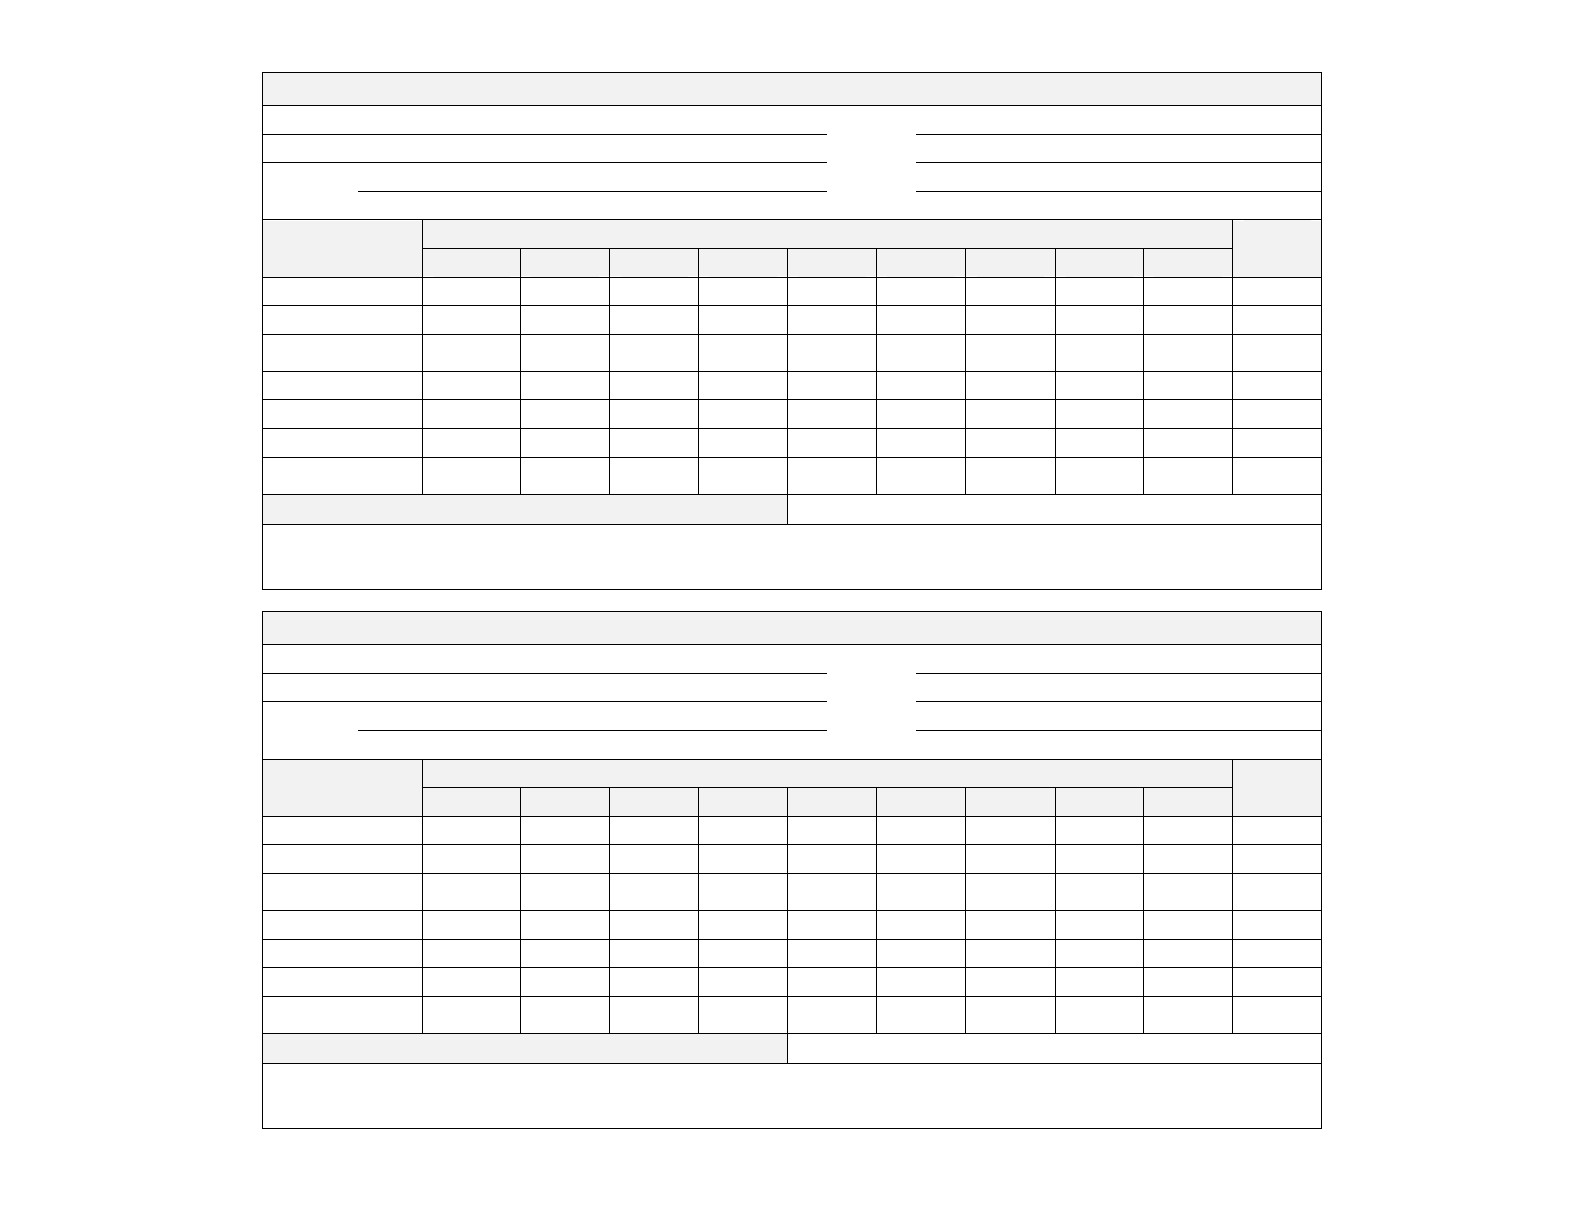 Kickball Score Sheet Free Download